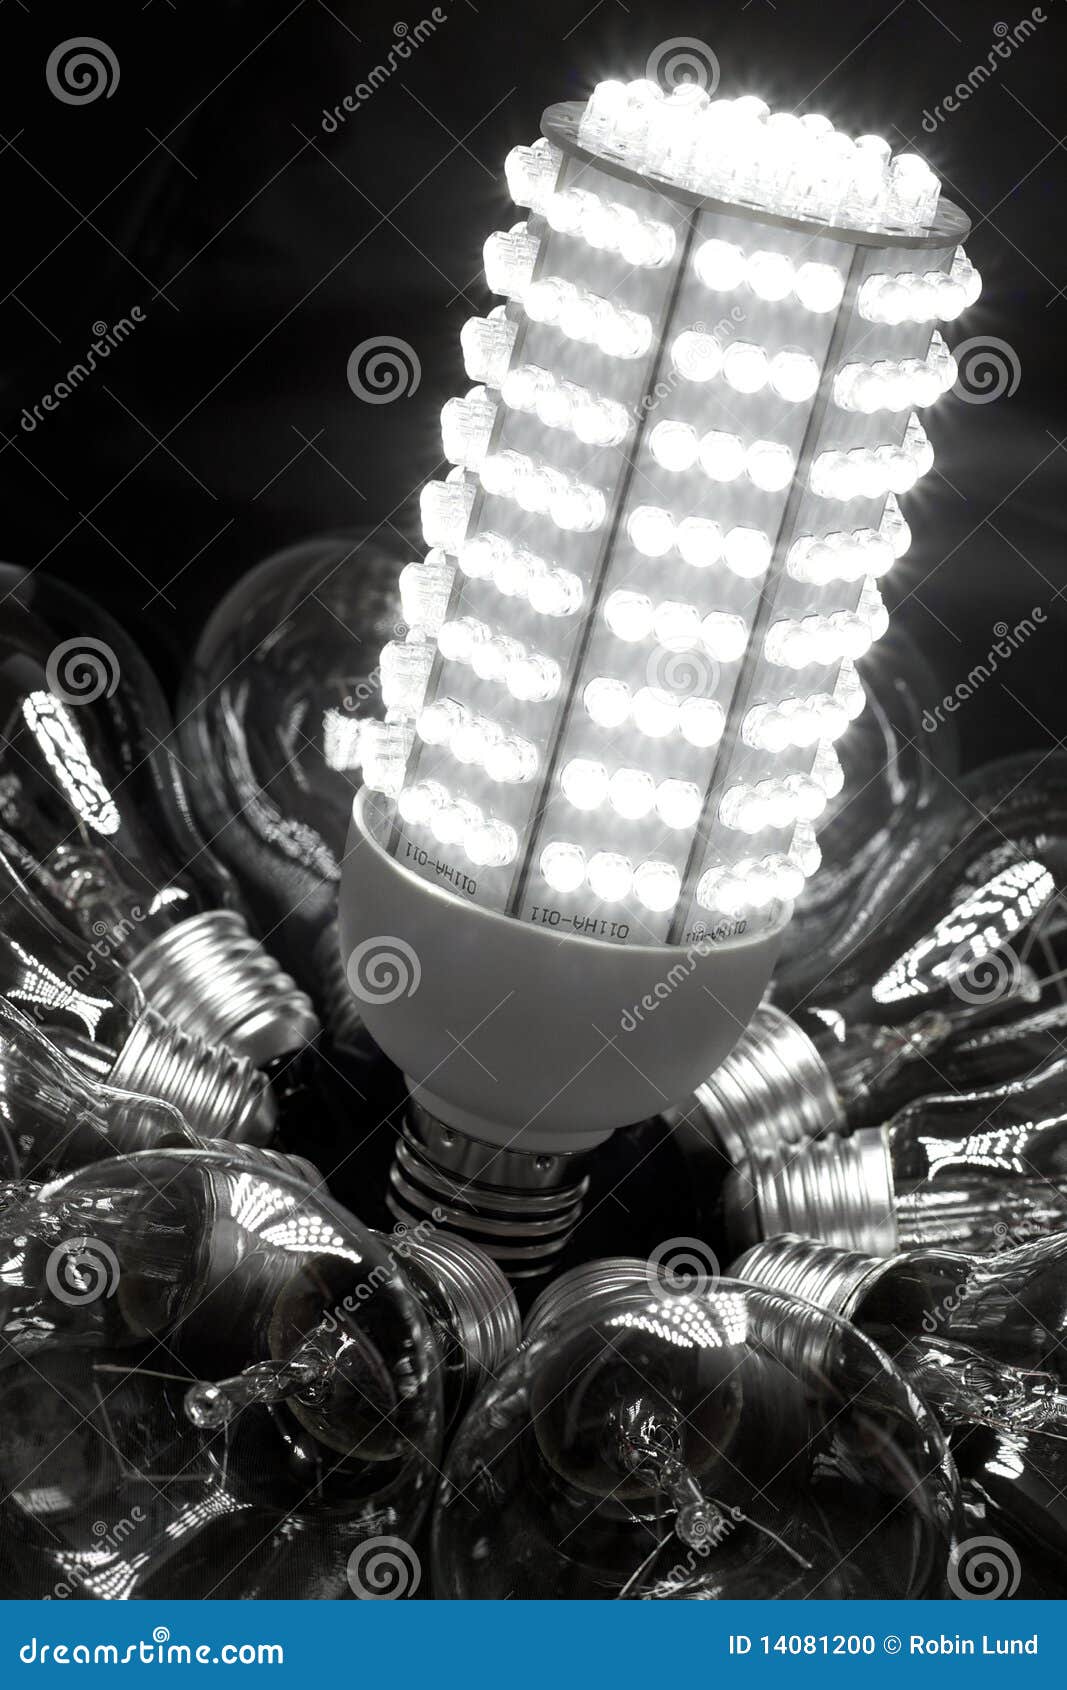 Bright future of the LED stock photo. Image of edison - 14081200